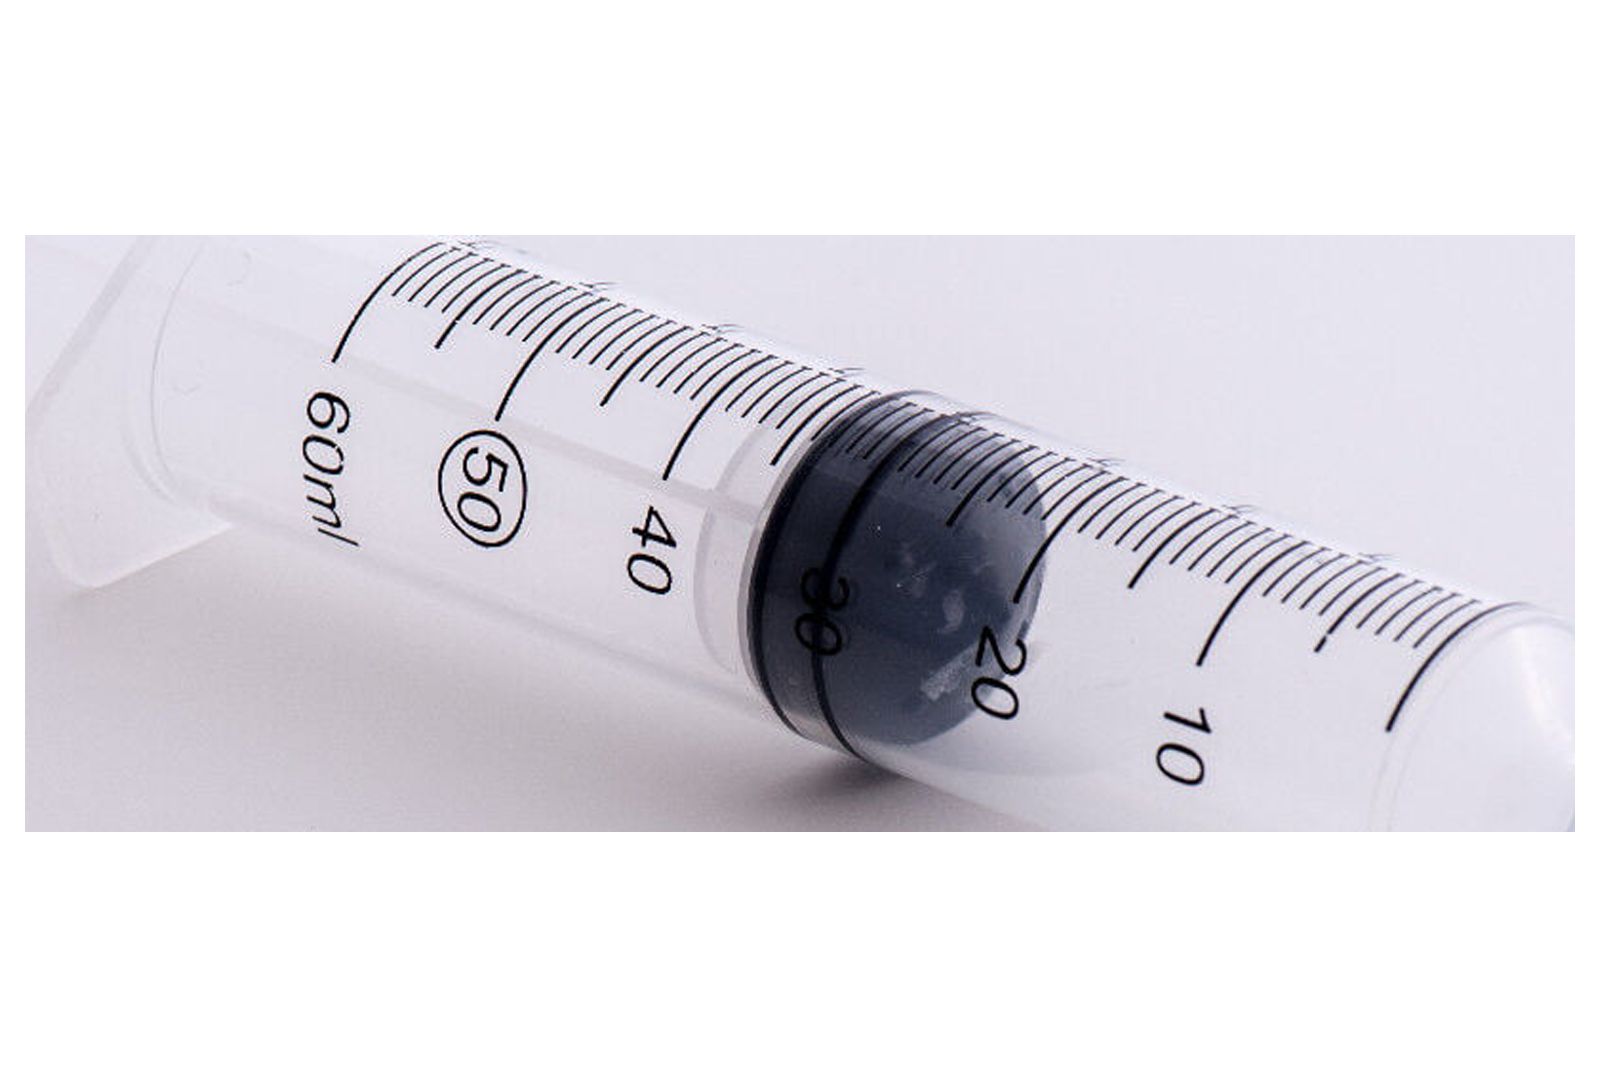 Catheter Tip Syringe 60ML 60CC -Sterile - No Needle - 10 Pack - image 4 of 6